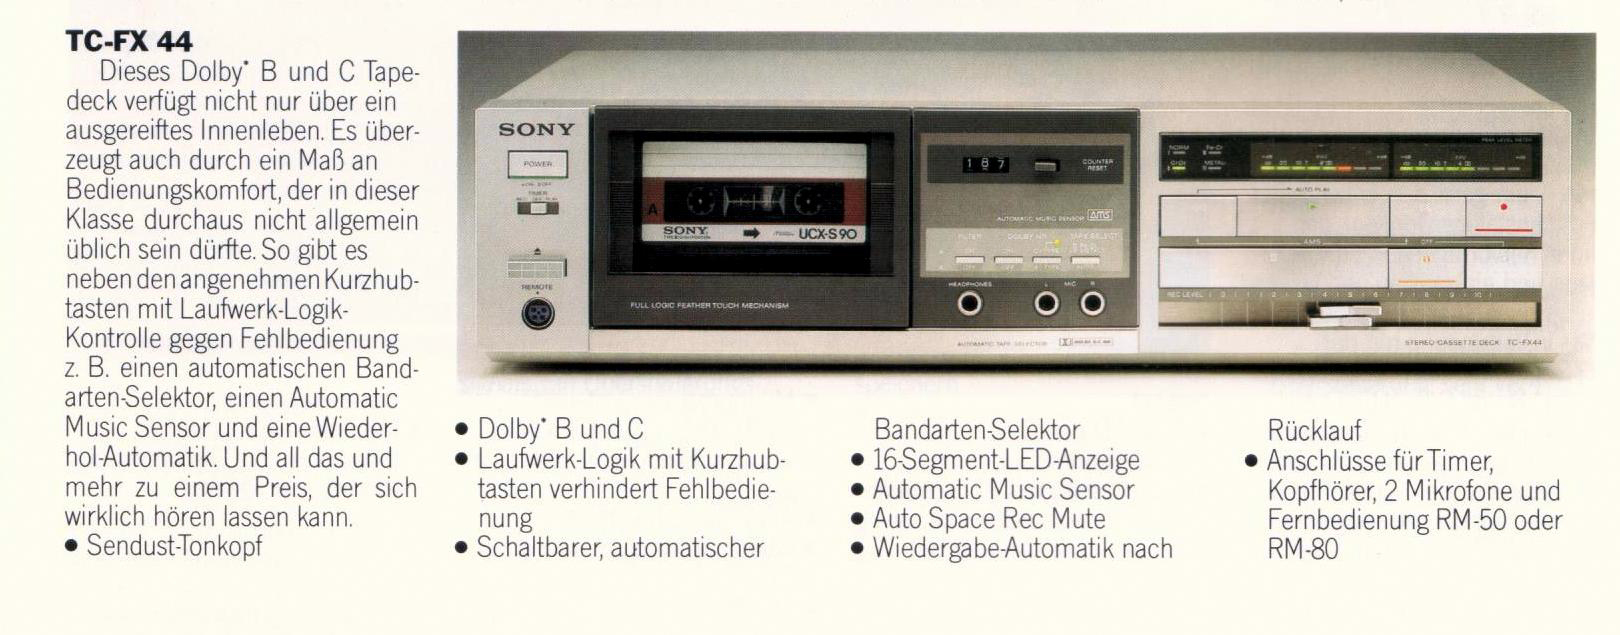 Sony TC-FX 44-Prospekt-1982.jpg